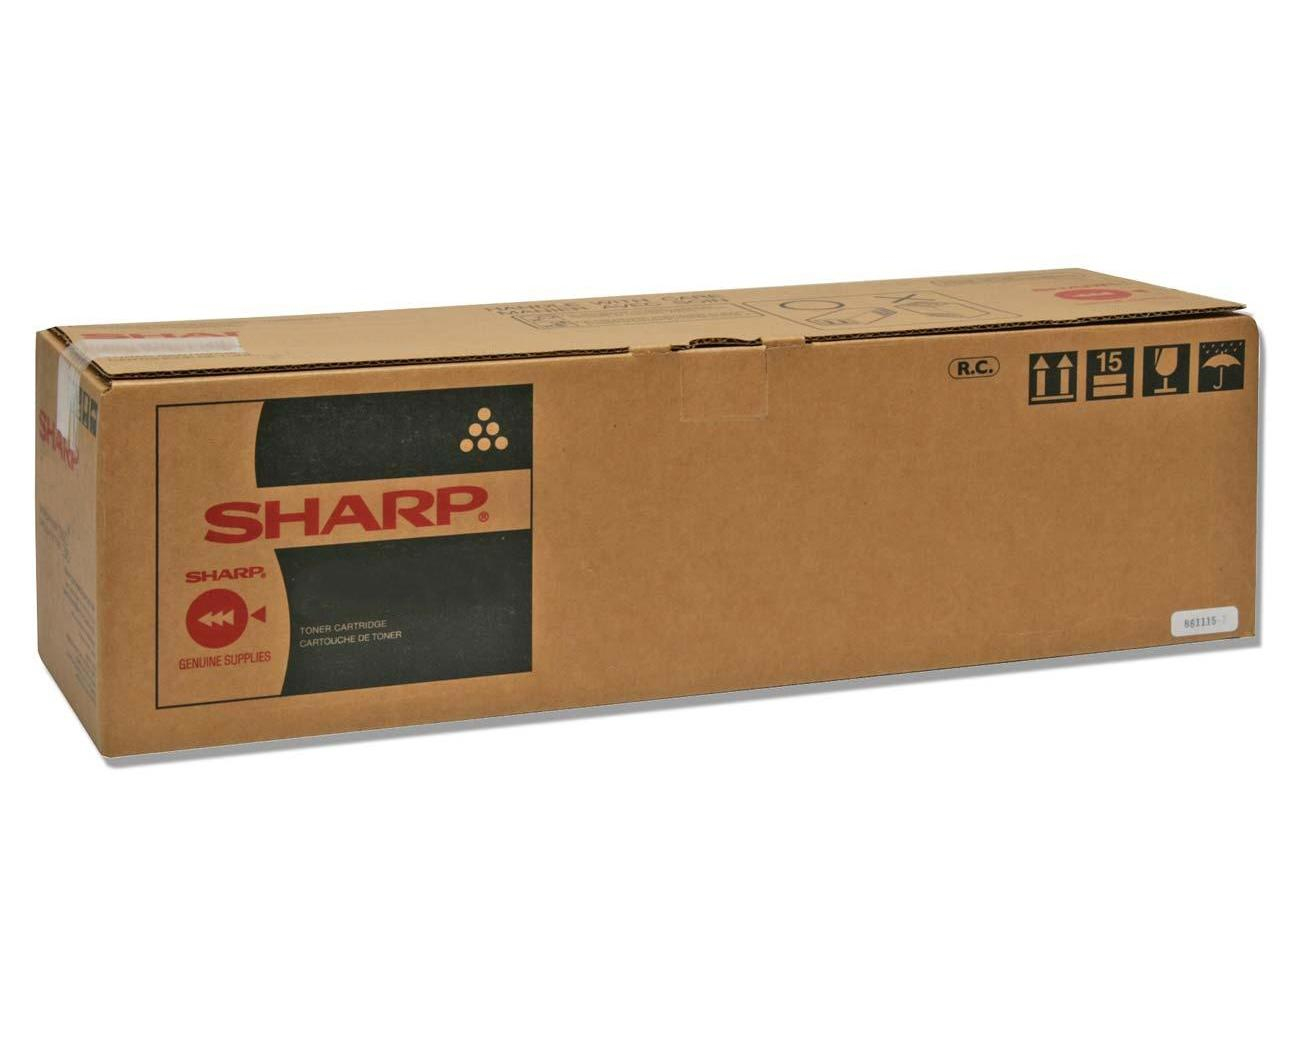 Sharp ar-c18ld1 developer zwart standard capacity 80.000 paginas 1-pack